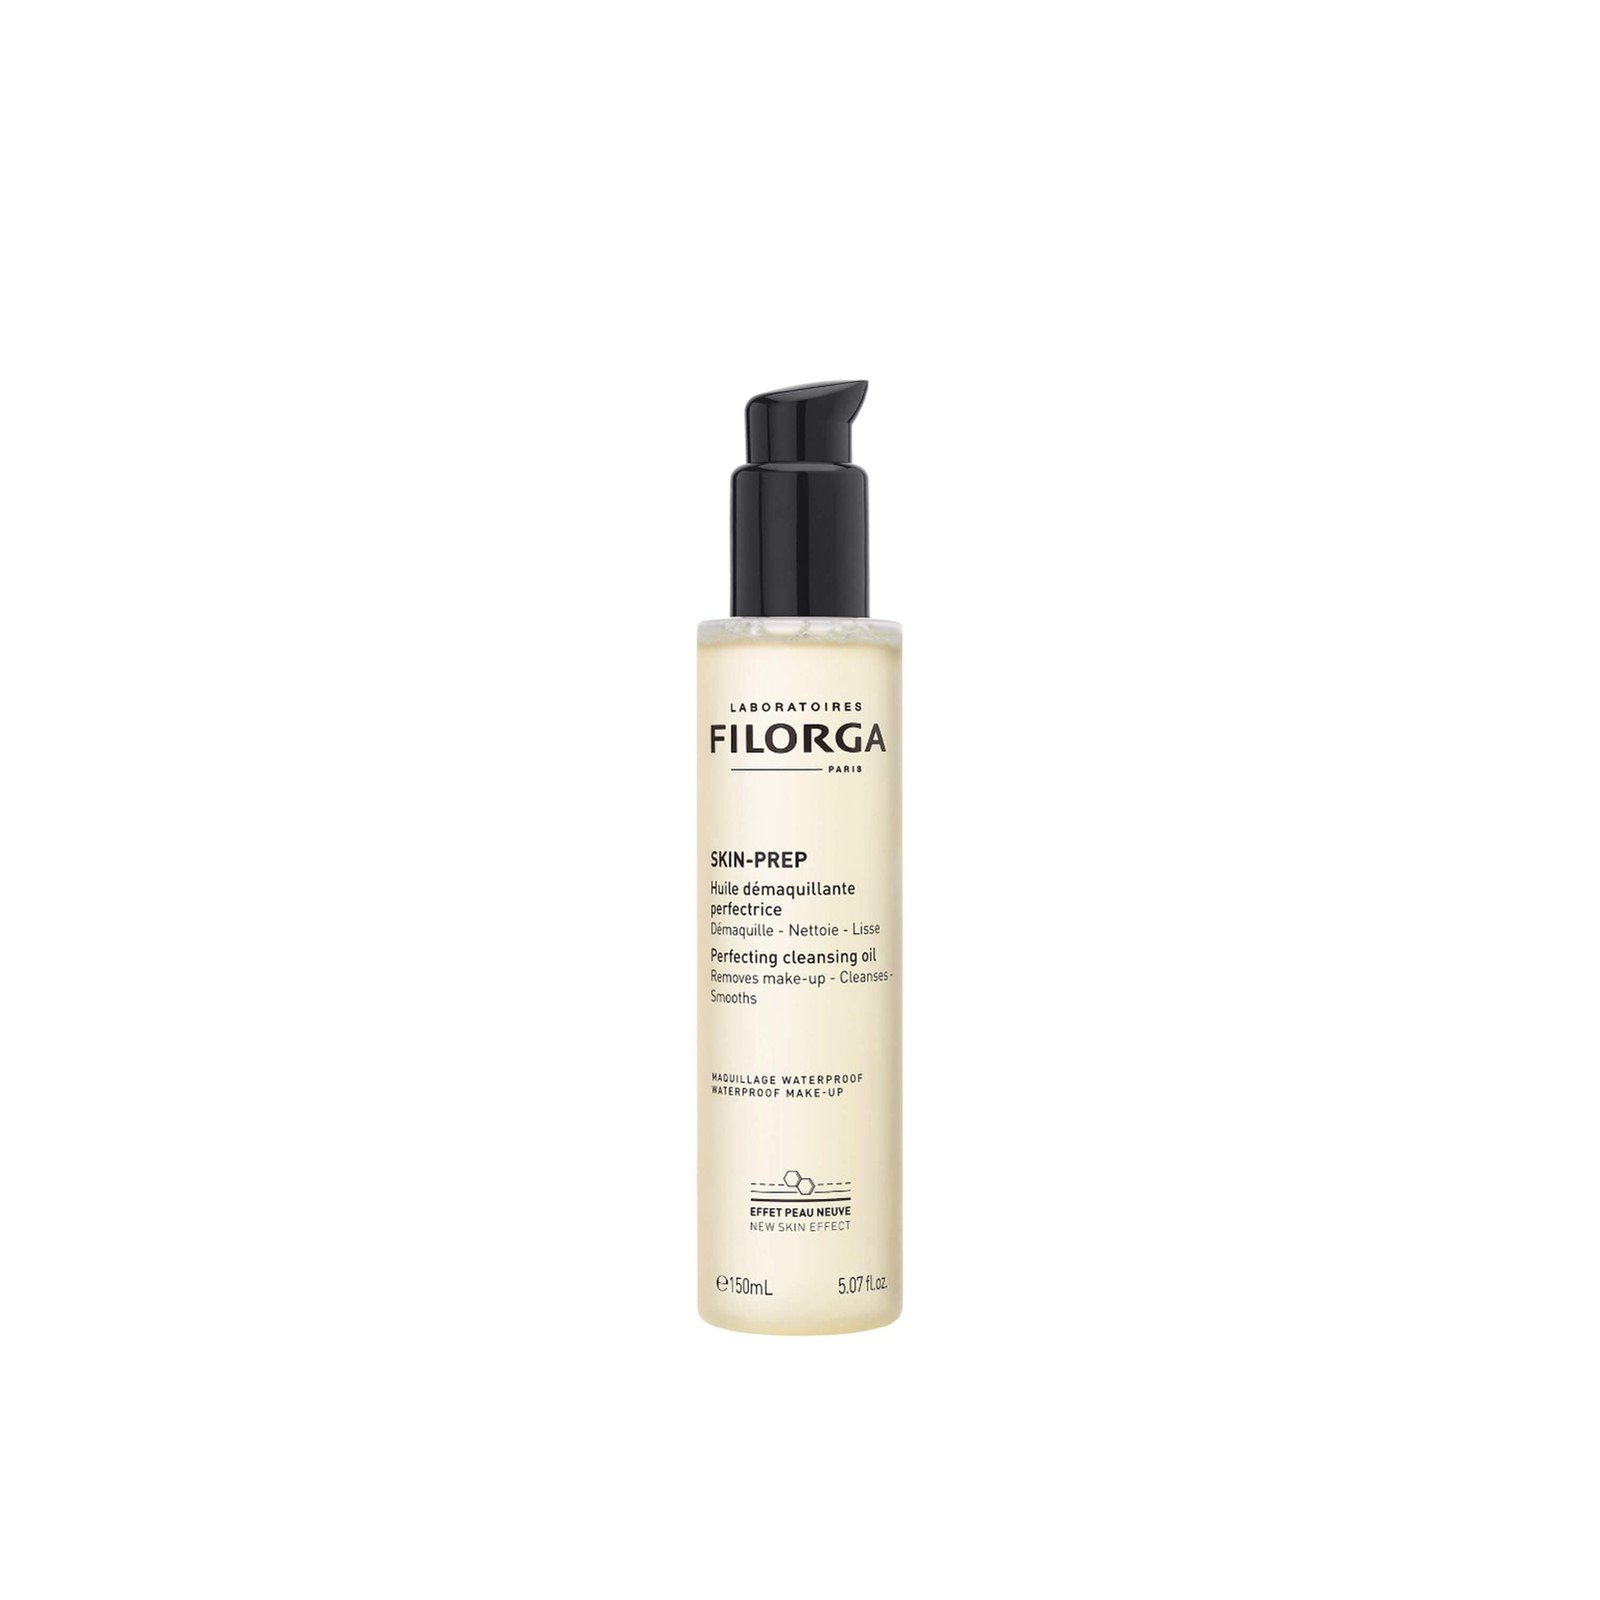 Filorga Skin-Prep Perfecting Cleansing Oil 150ml (5.07floz)